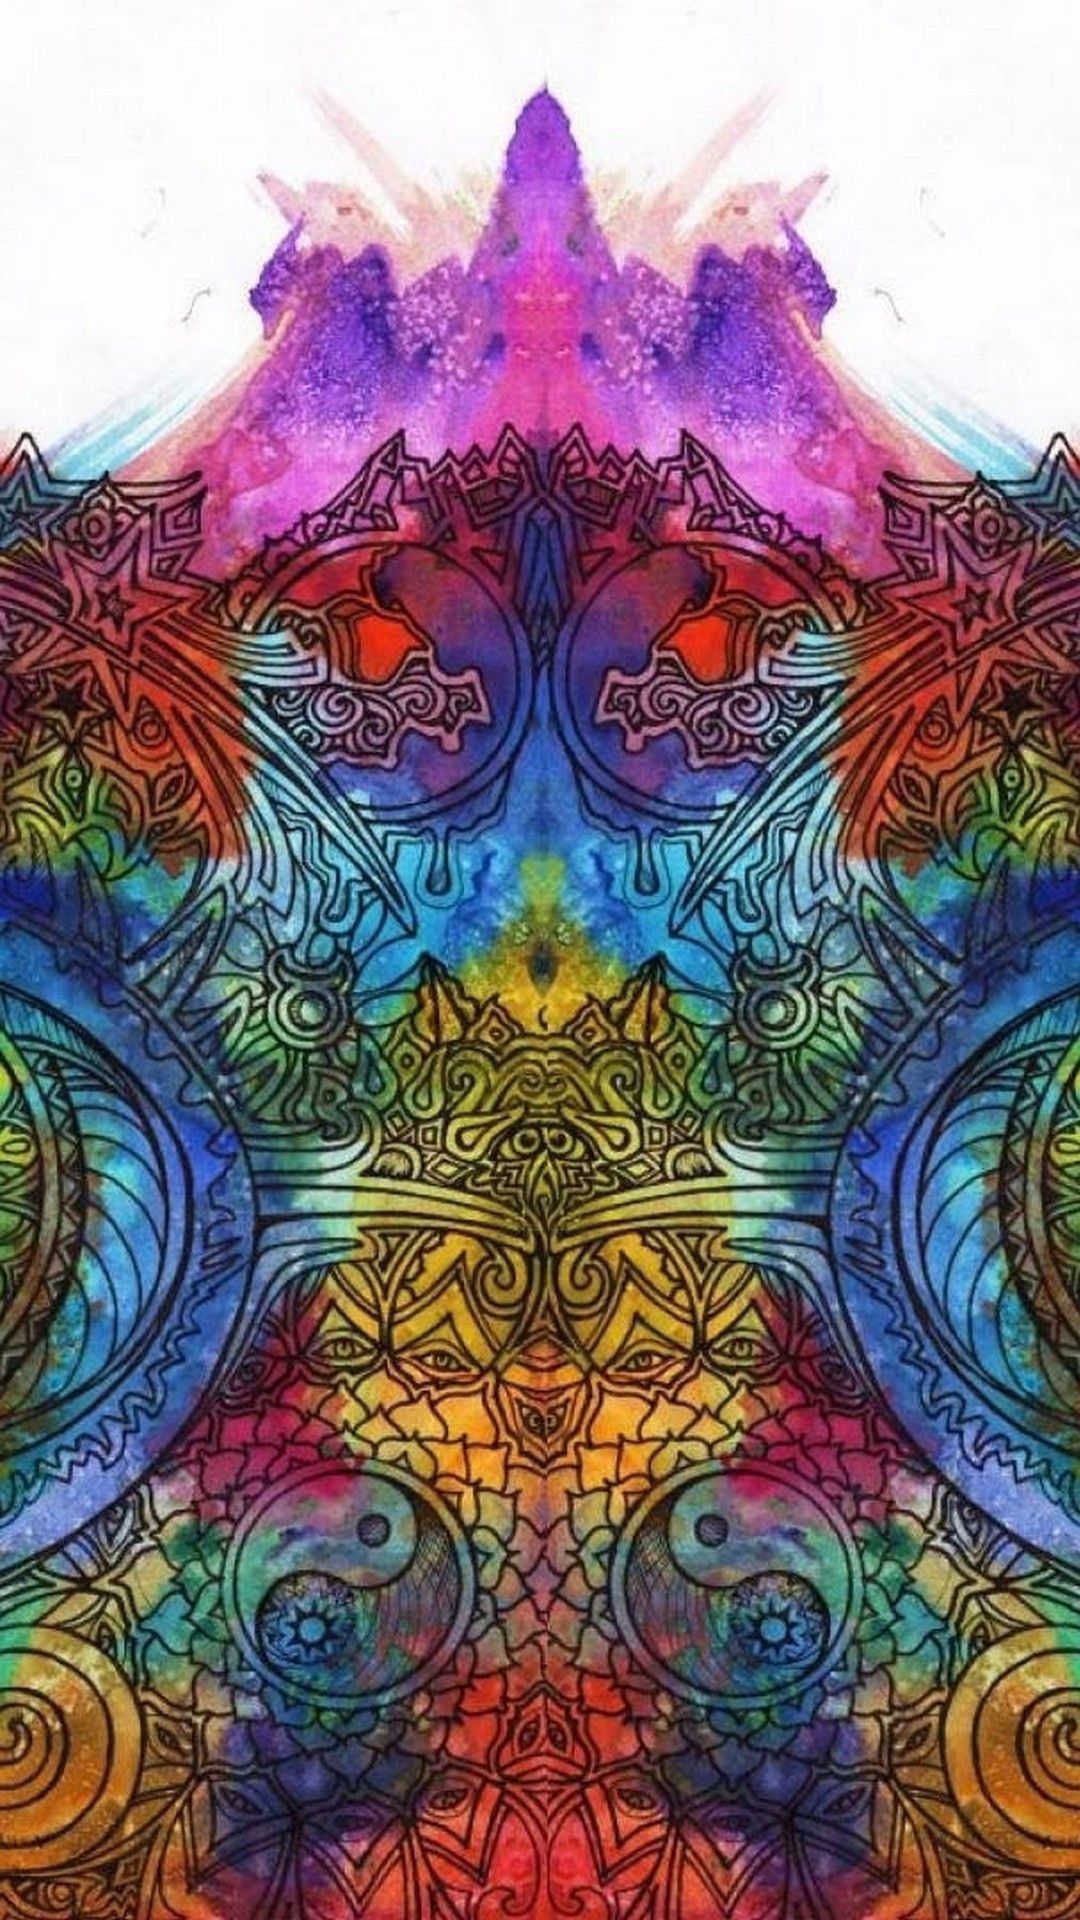 Wallpaper  face colorful illustration artwork surreal pattern skull  spectral ART design screenshot computer wallpaper fractal art psychedelic  art 2048x1536  arg81  226144  HD Wallpapers  WallHere